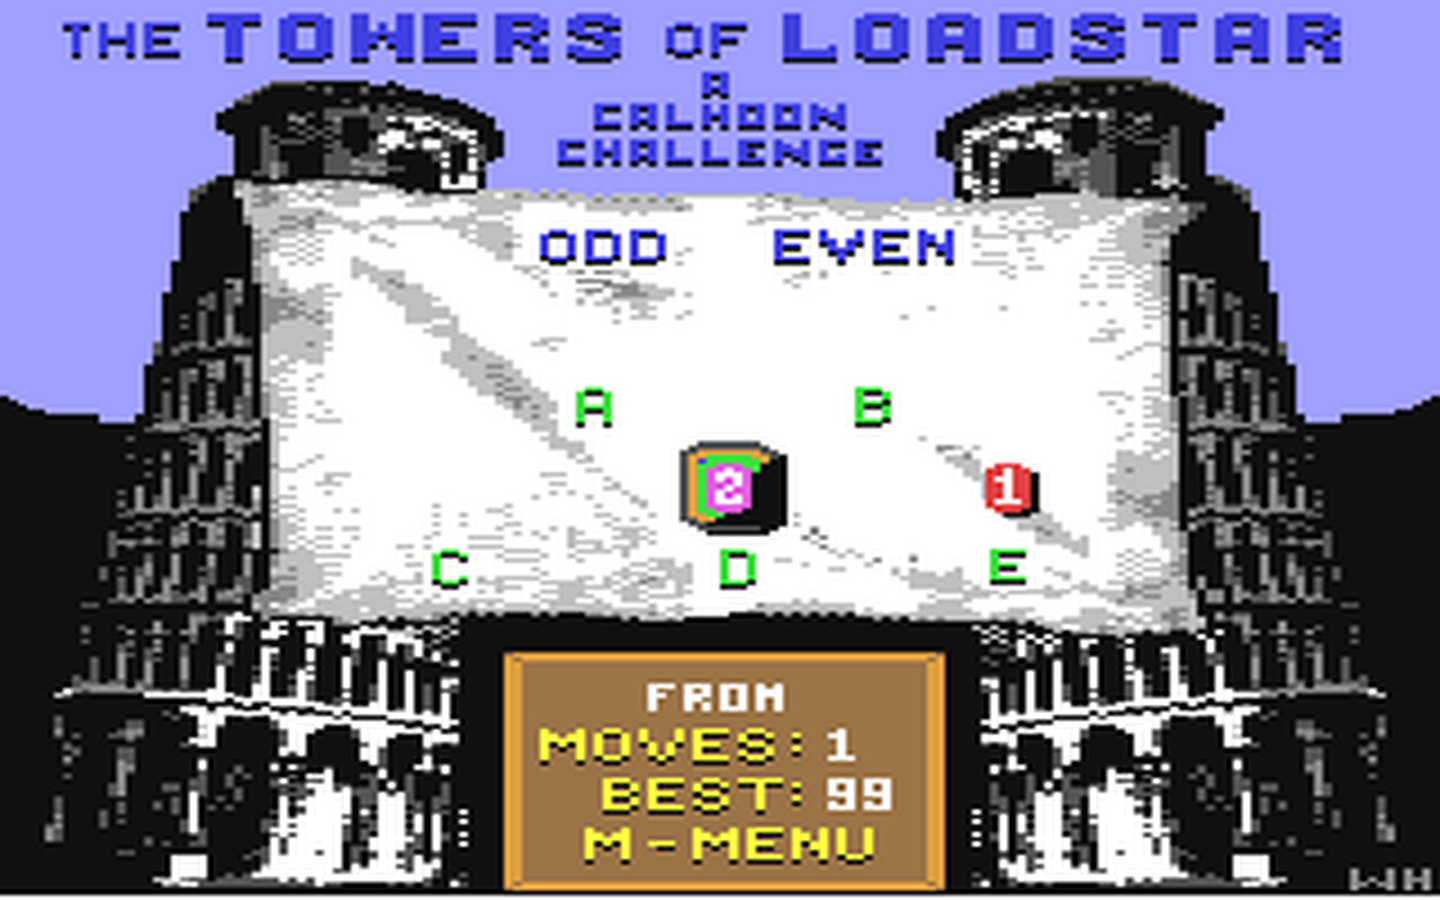 C64 GameBase Towers_of_Loadstar,_The Loadstar/J_&_F_Publishing,_Inc. 1996